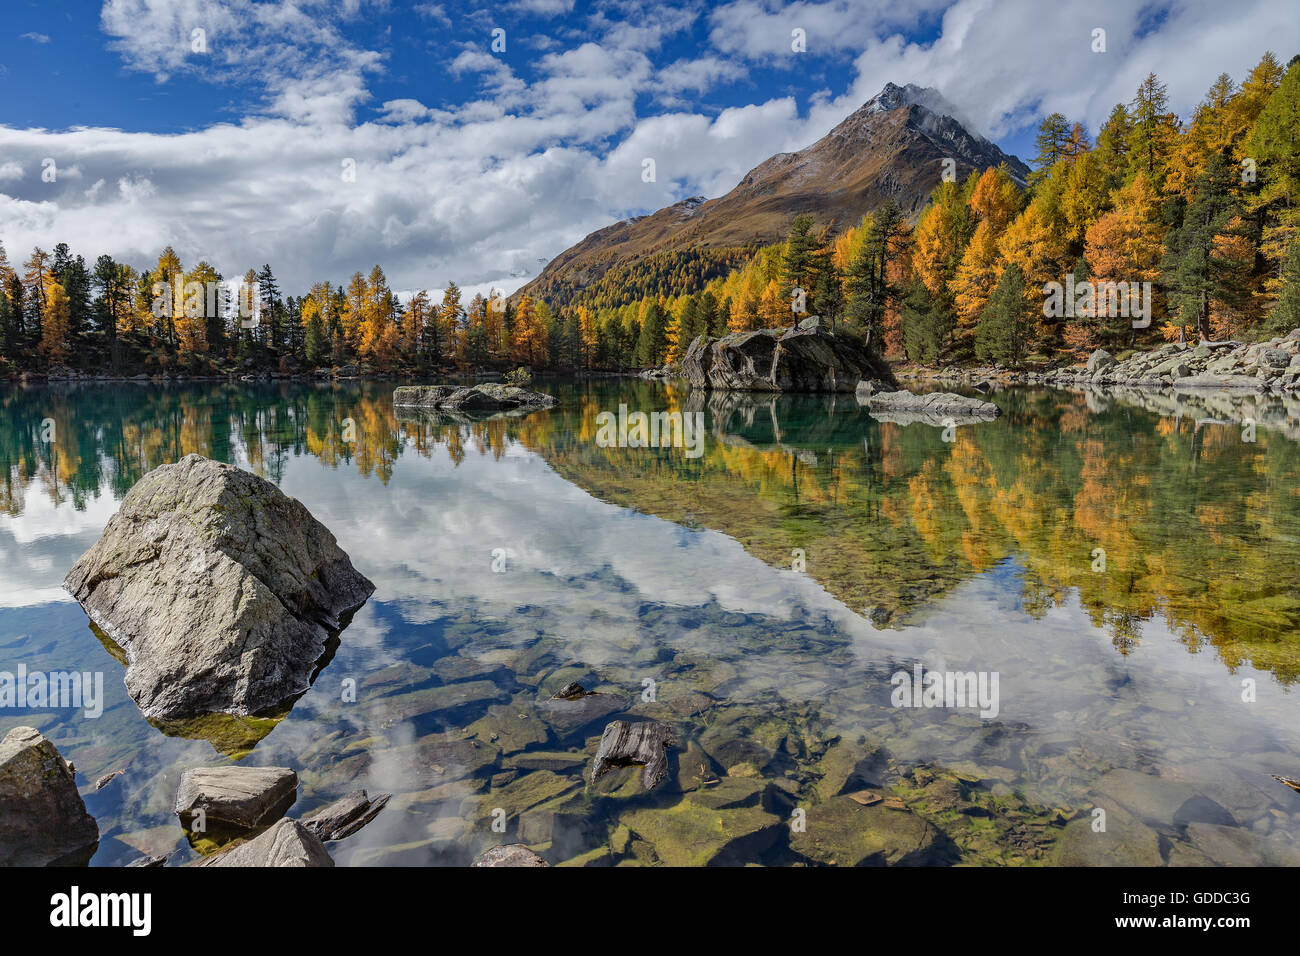 Nature,Landscape,Mountain,Lake,Mountain lake,Autumn,Snow,Saoseosee,Graubünden,Grisons,Switzerland,Alps,Tree,Trees, Stock Photo